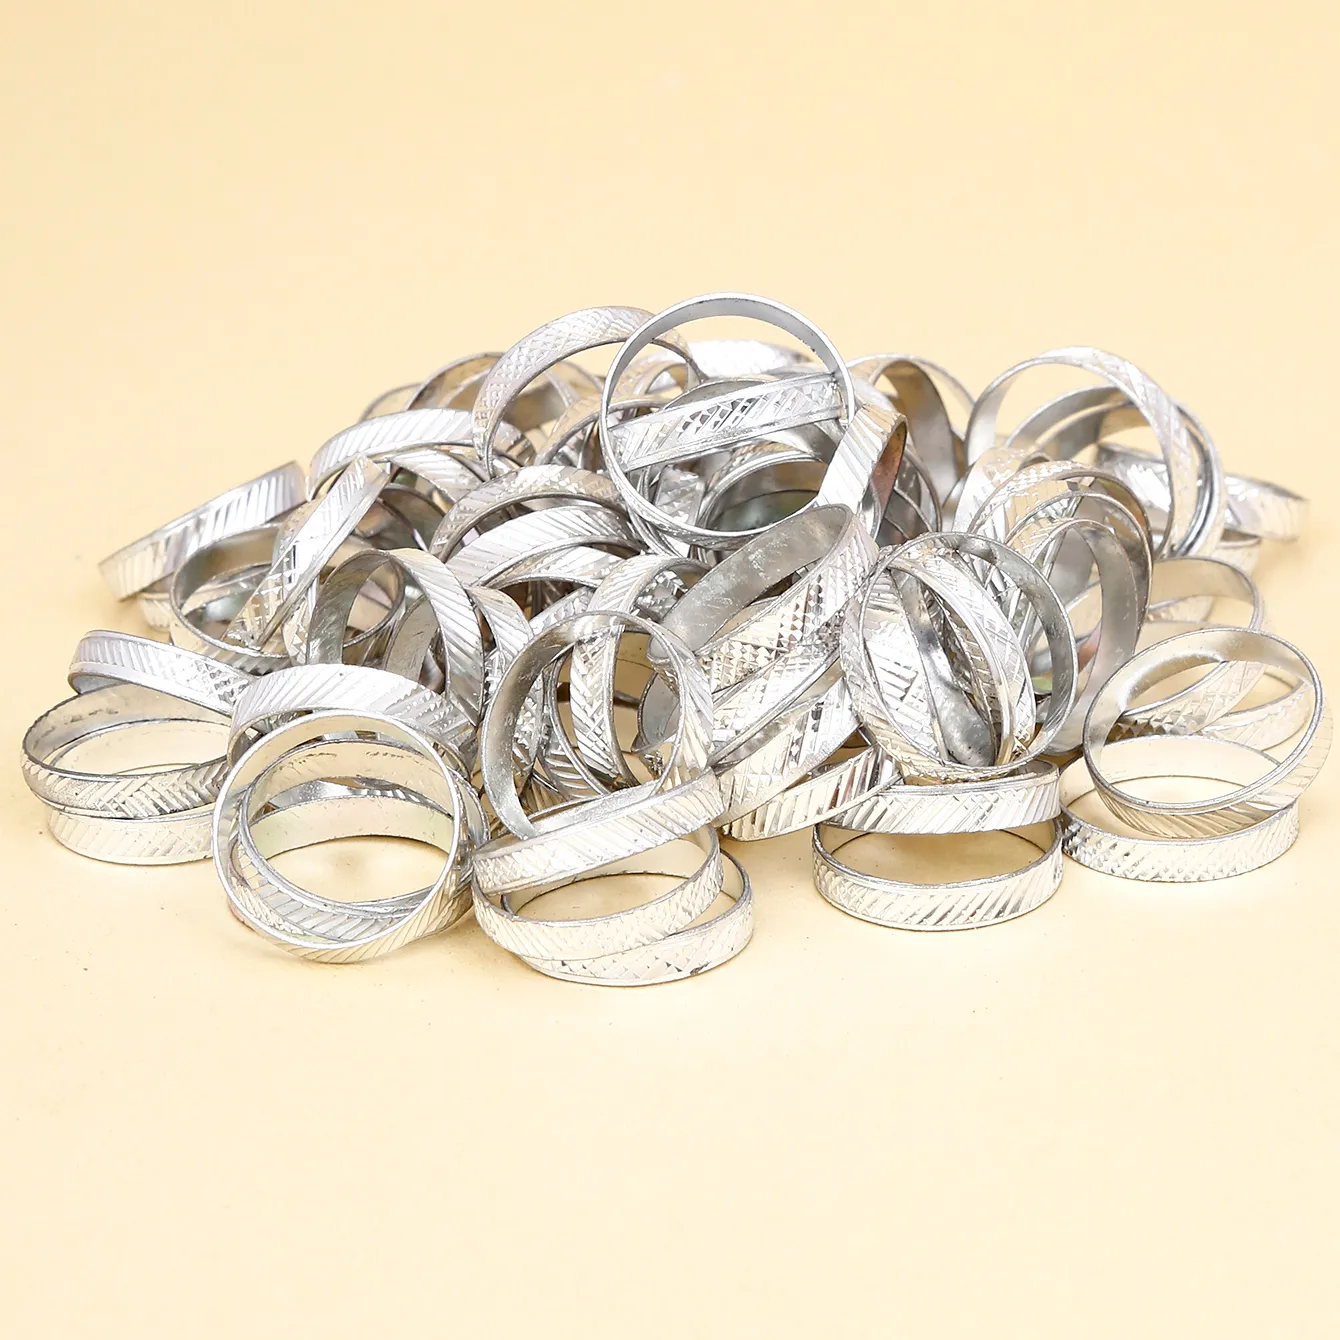 New Model Random Size,100PCS 1 Bag,Simple Style Silver Plated Aluminum Finger Rings For Women Gift